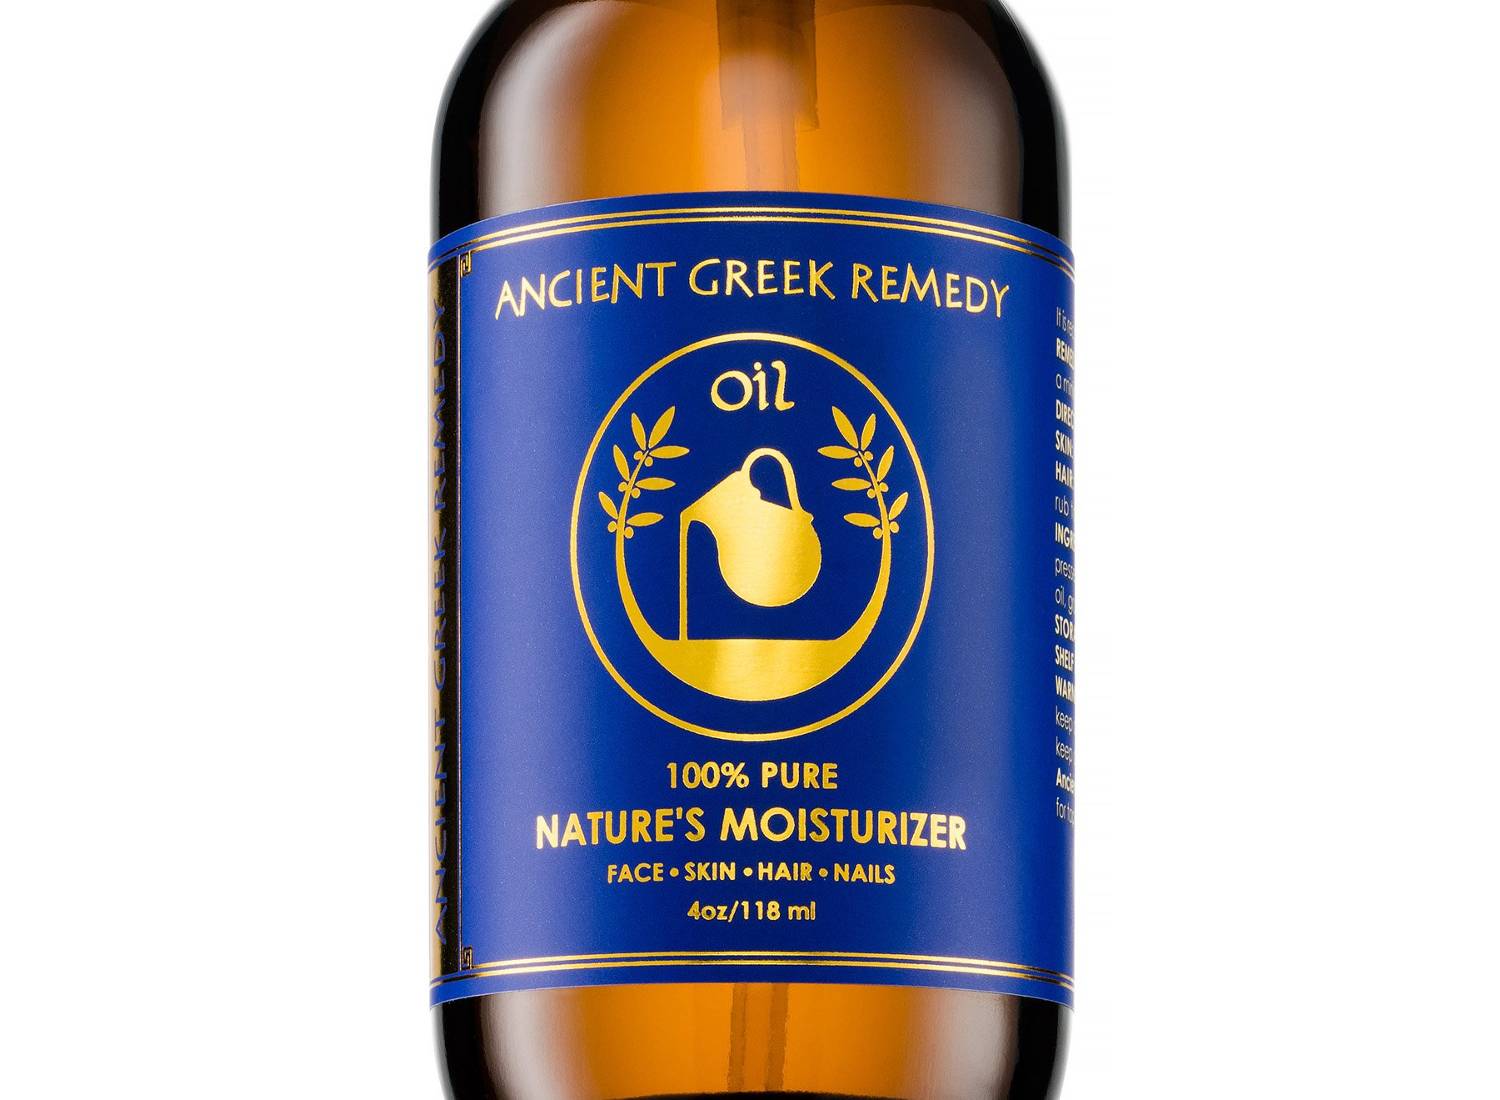 Bottle of ancient Greek remedy moisturizing oil